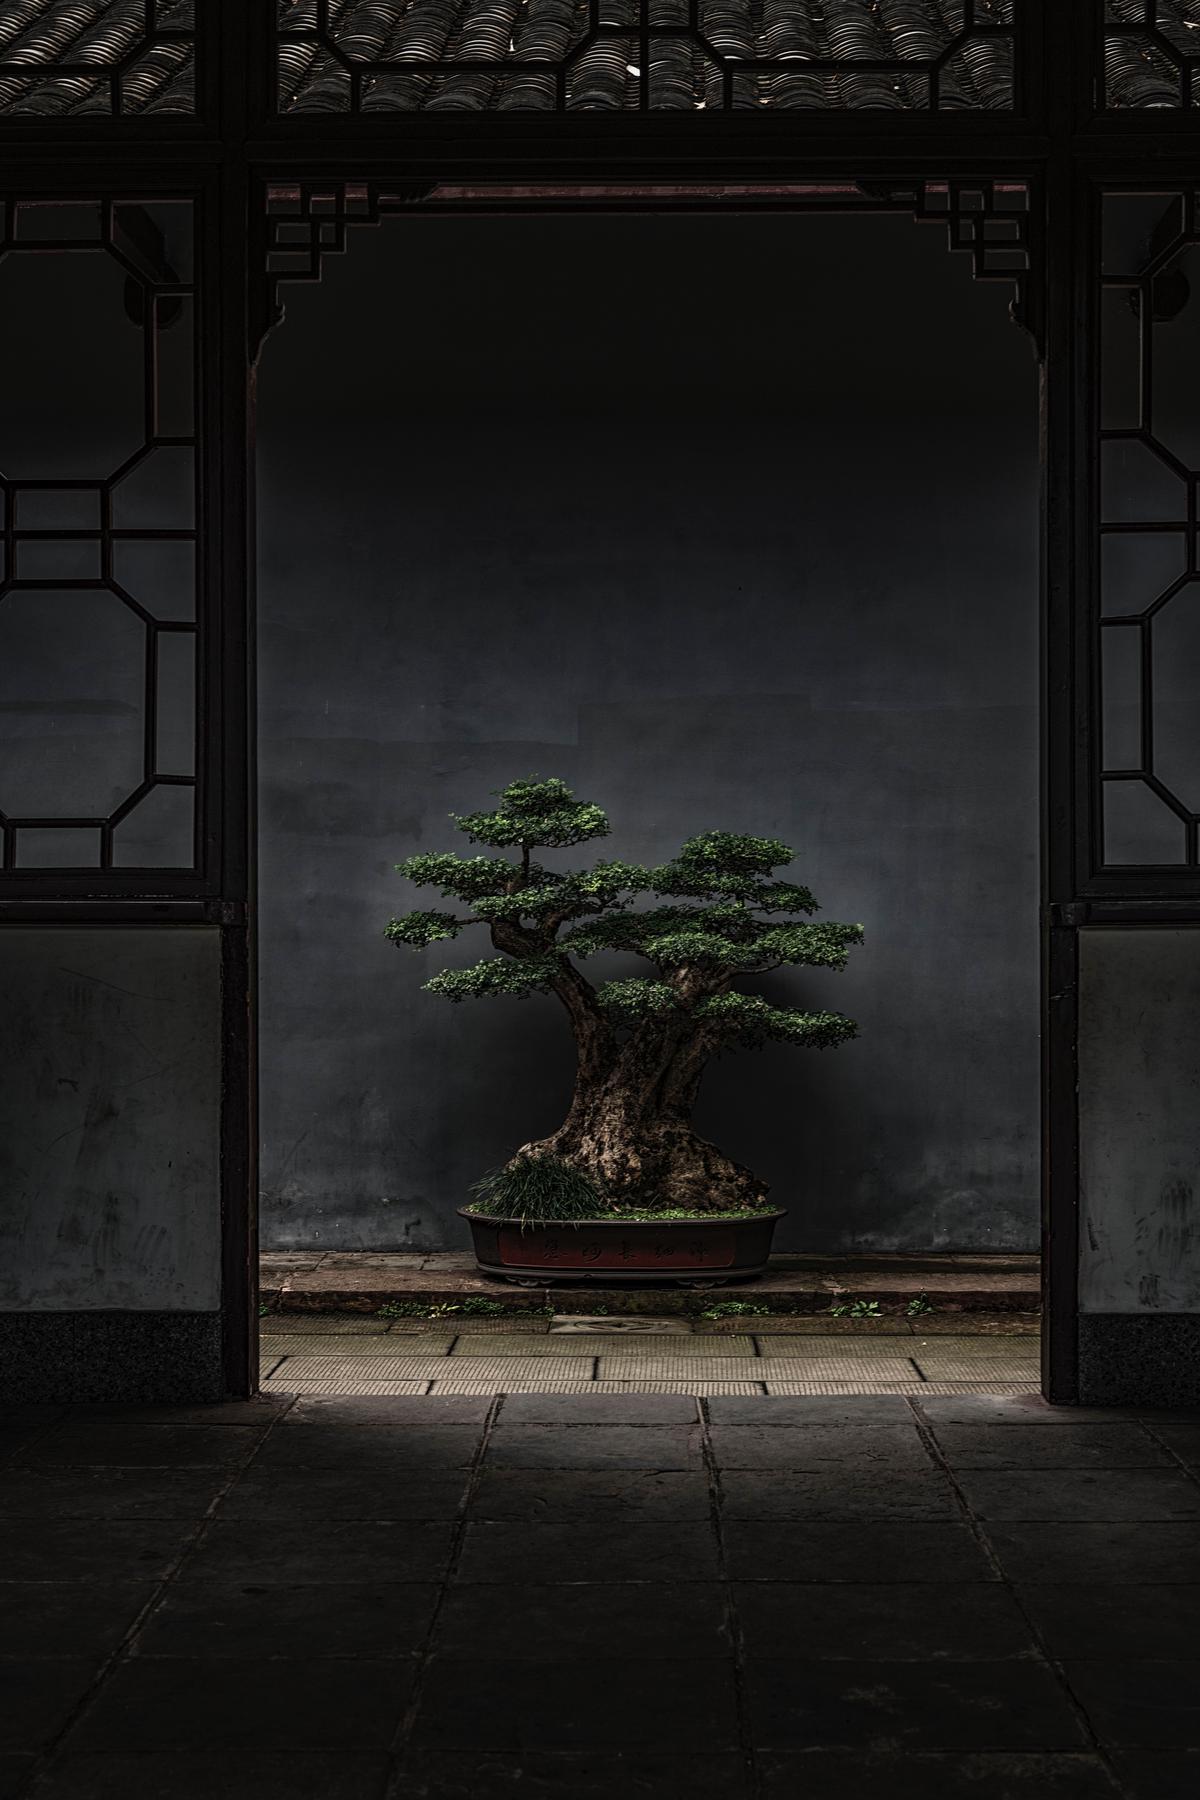 Image of a bonsai tree with well-developed Nebari, showcasing its beauty and age.